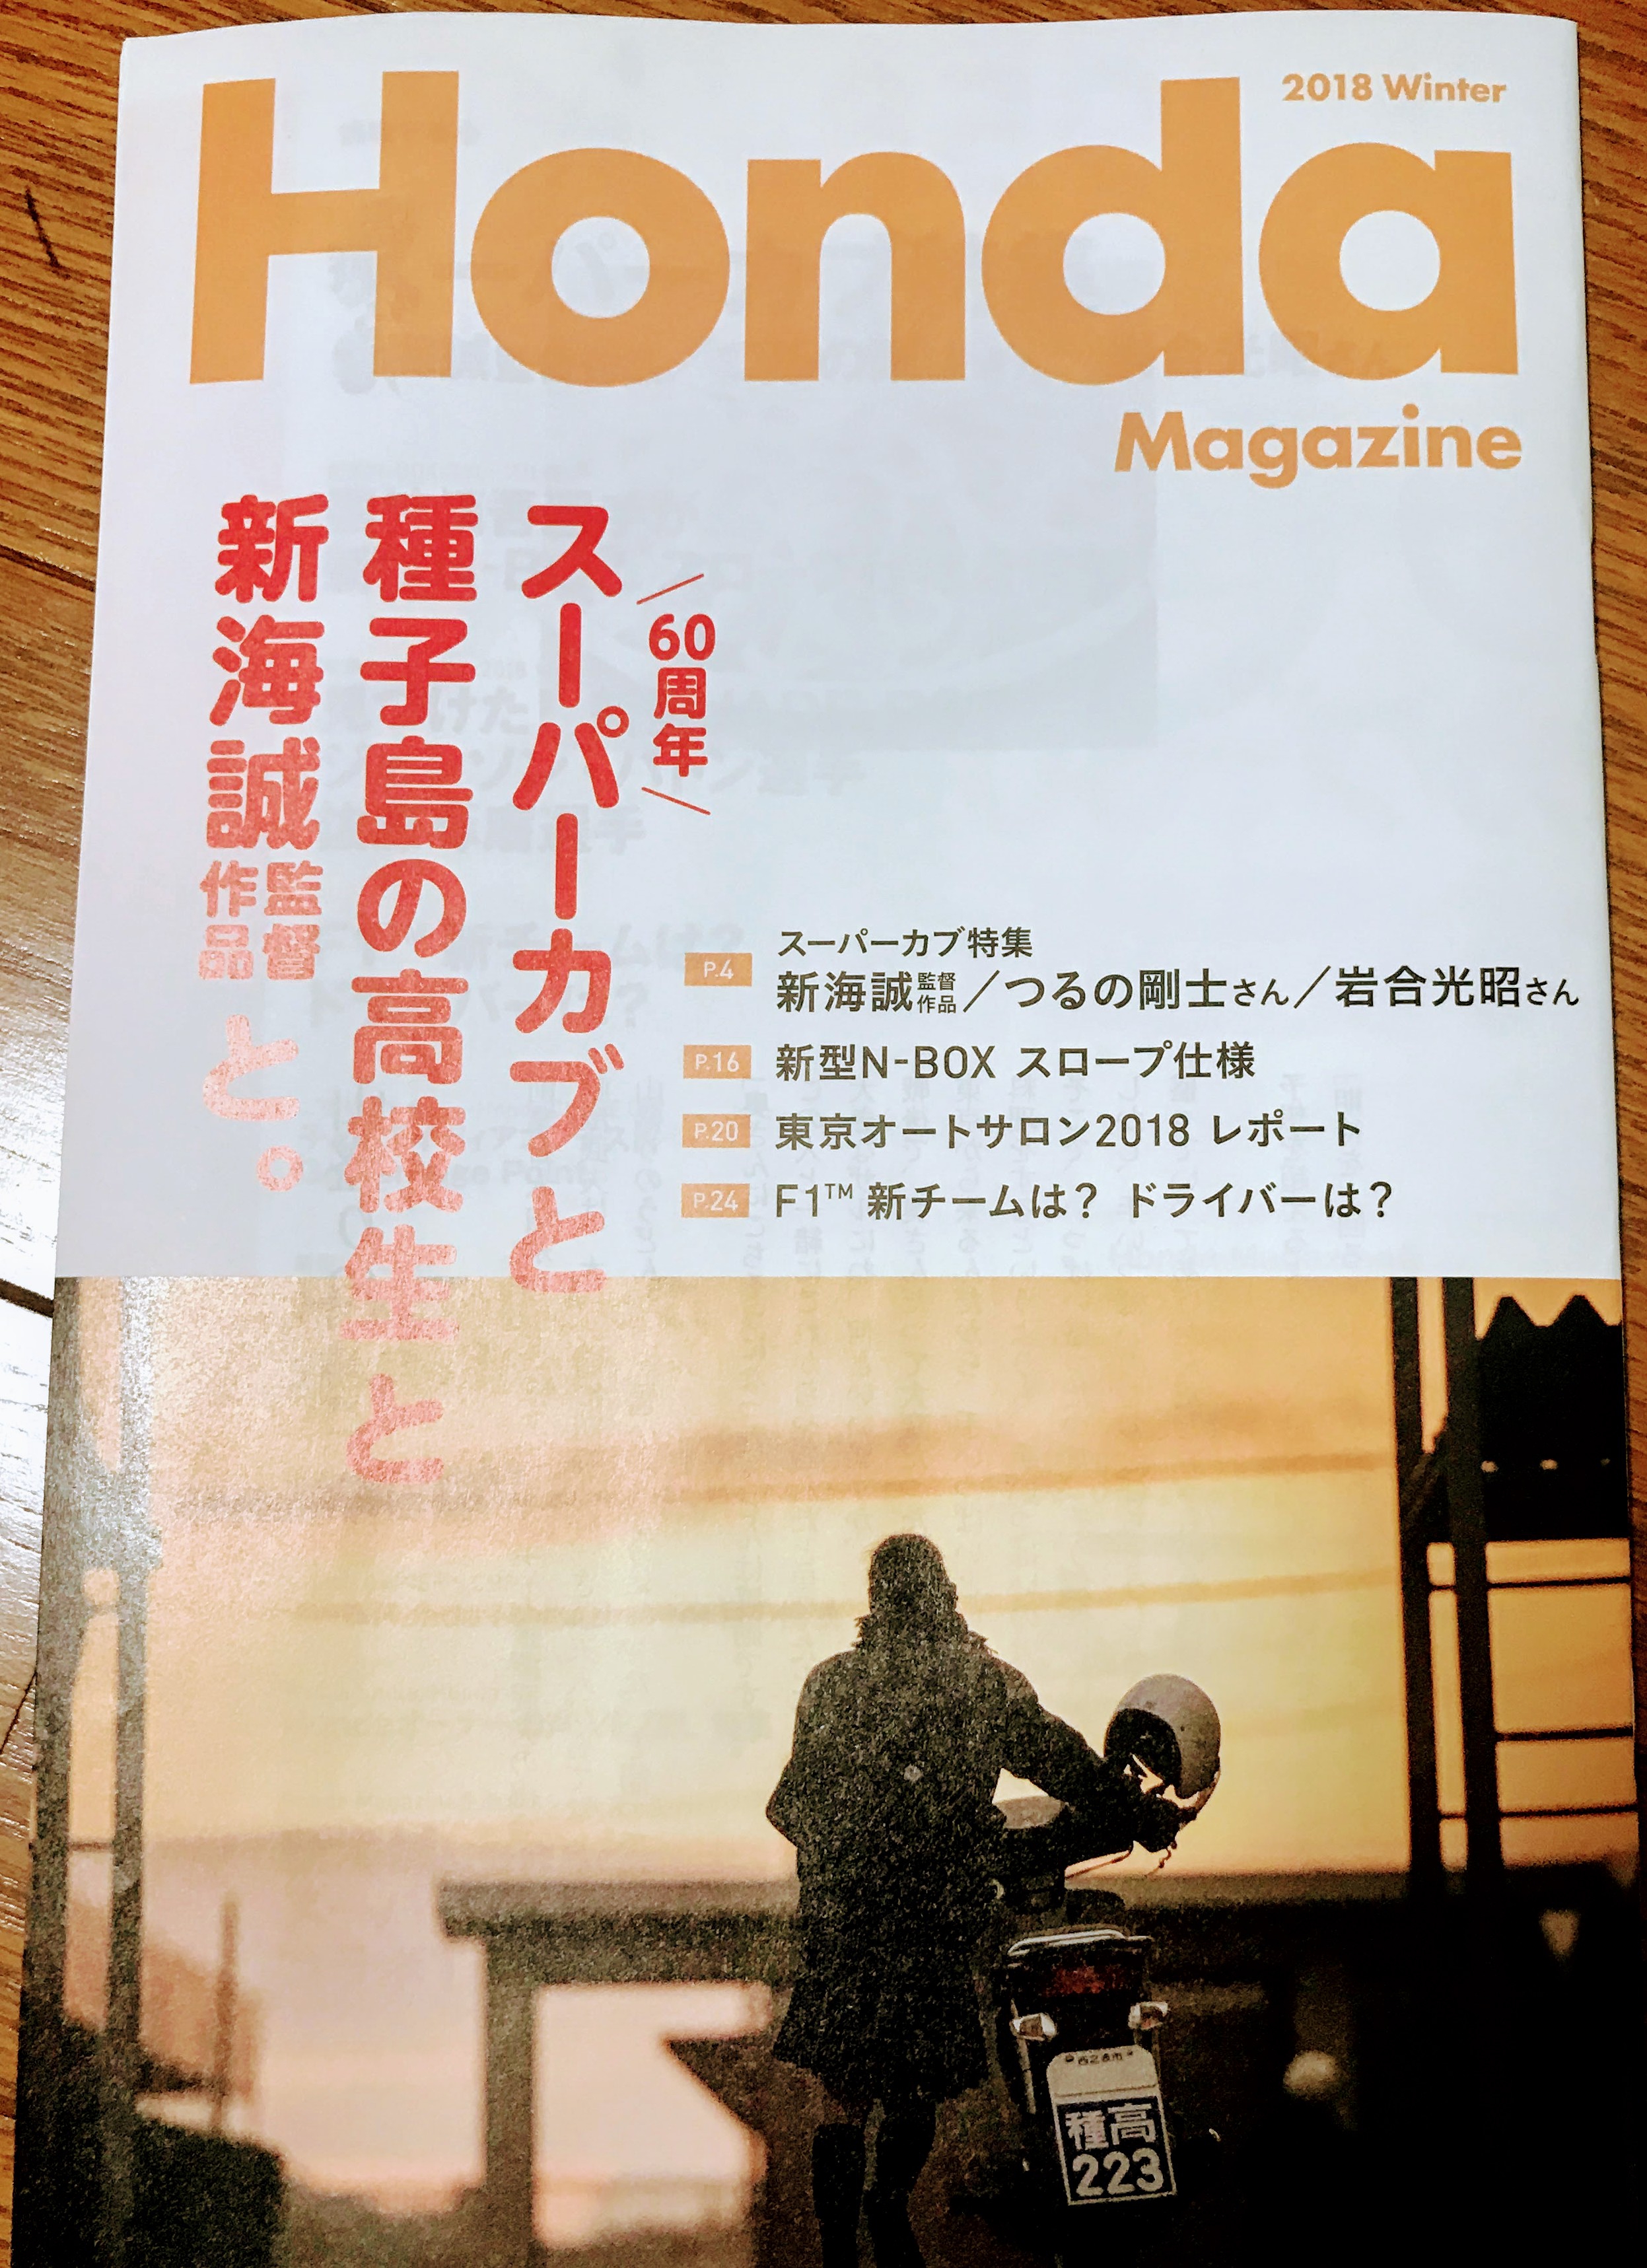 Honda Magazine最新号が届きました＾＾ちなみにHonda Magazineはpdfダウンロードも可能です♪